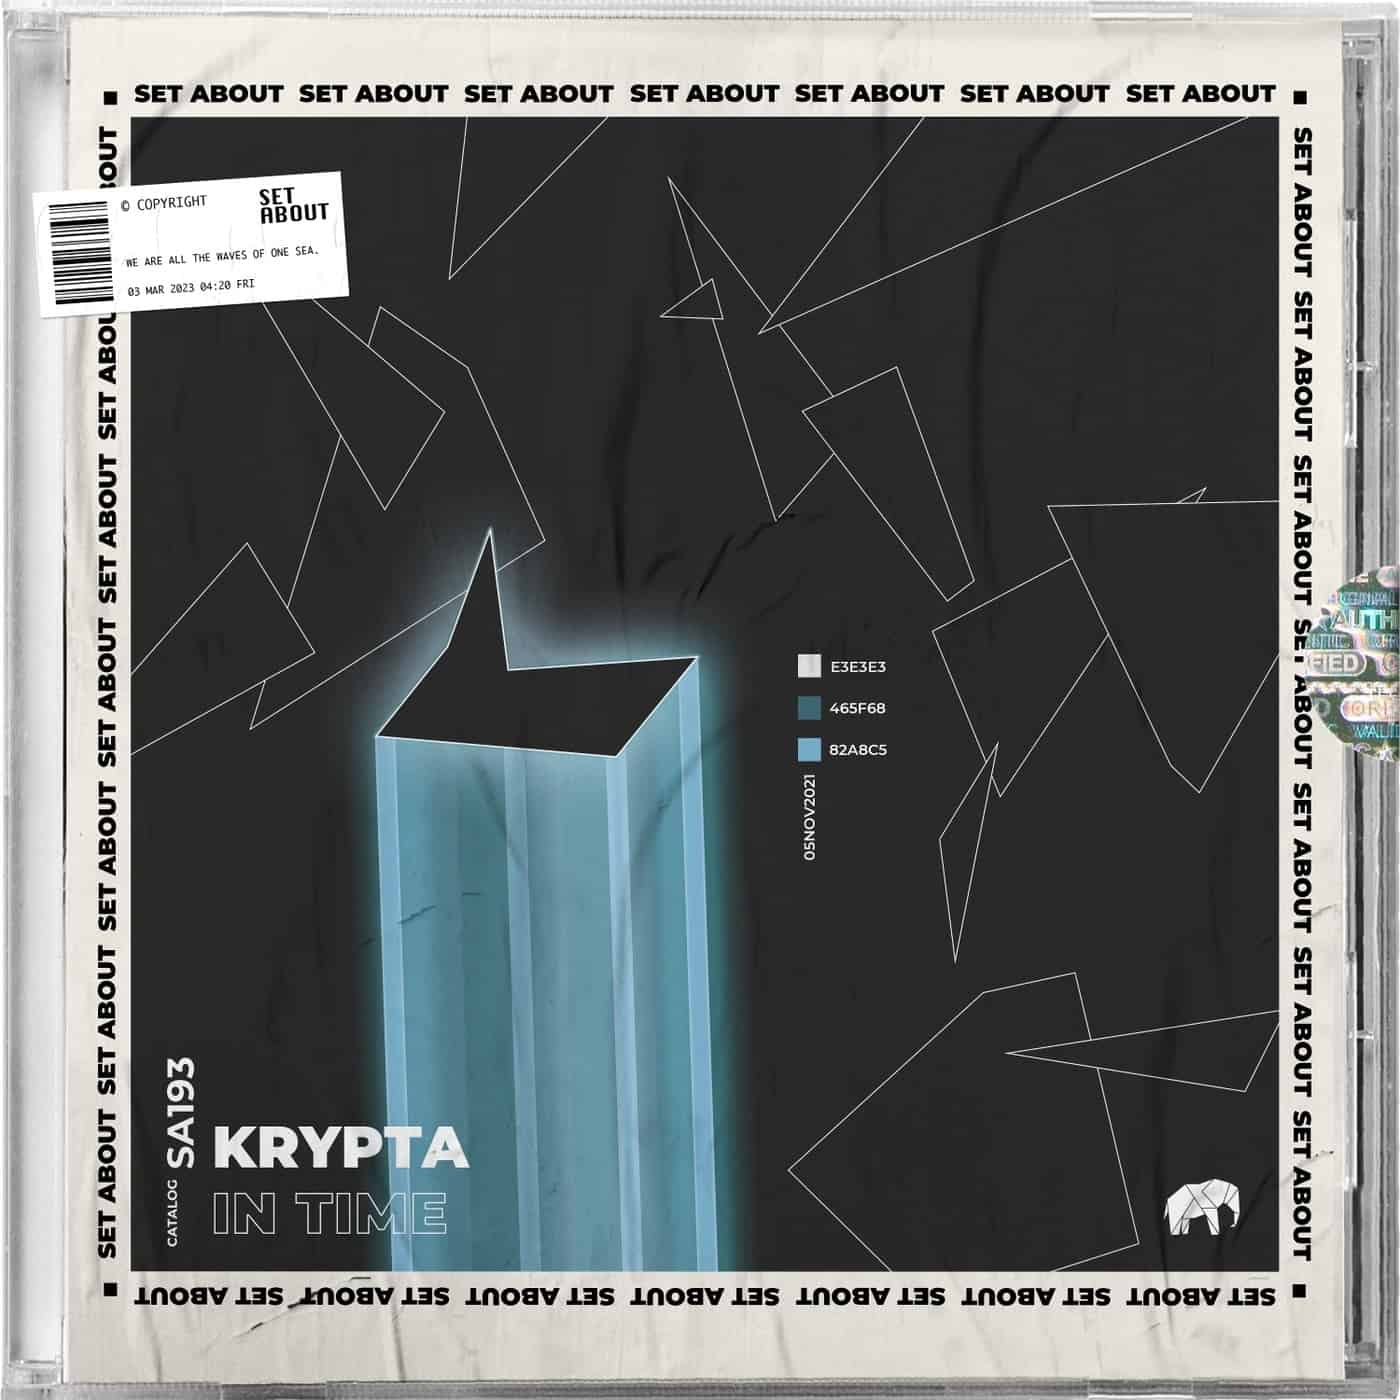 Download Krypta - In Time on Electrobuzz